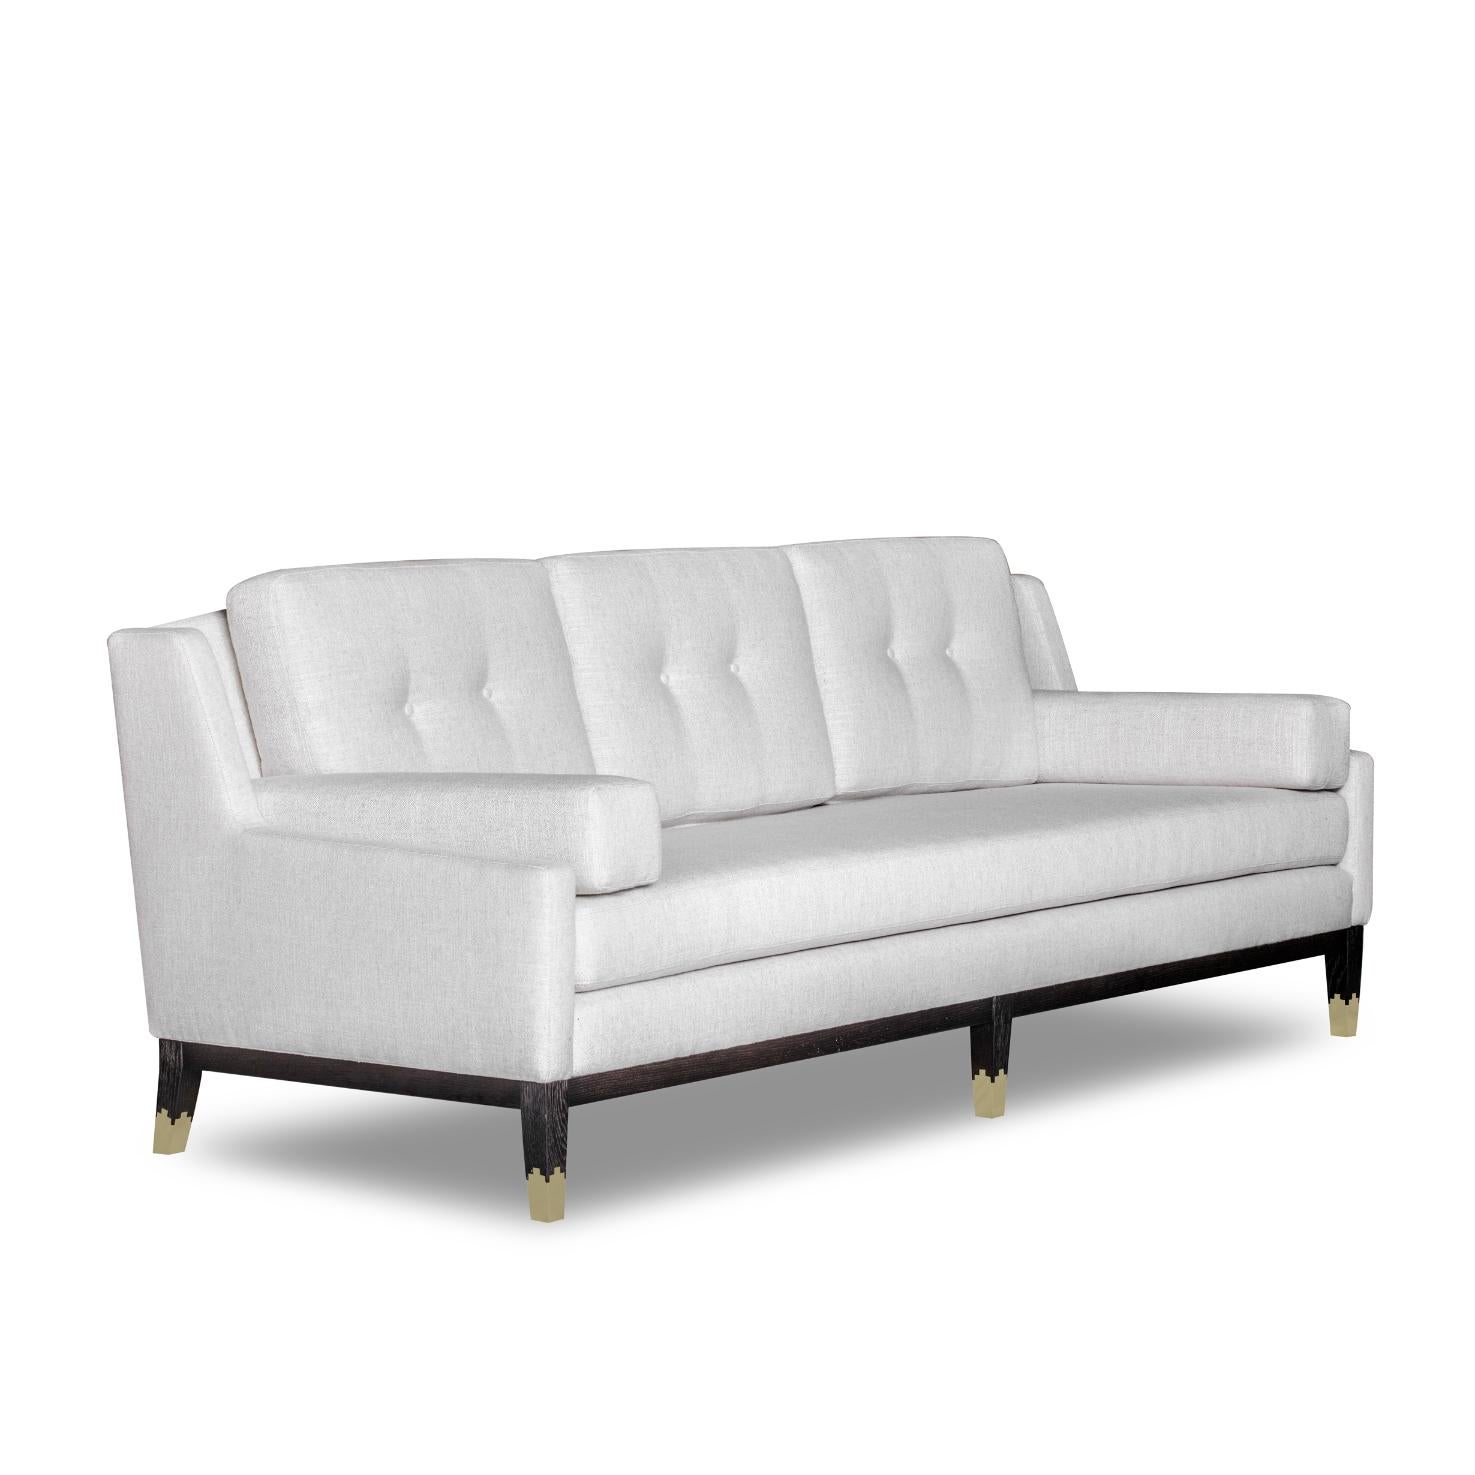 Post-Modern Mr Jones Sofa by DUISTT  For Sale